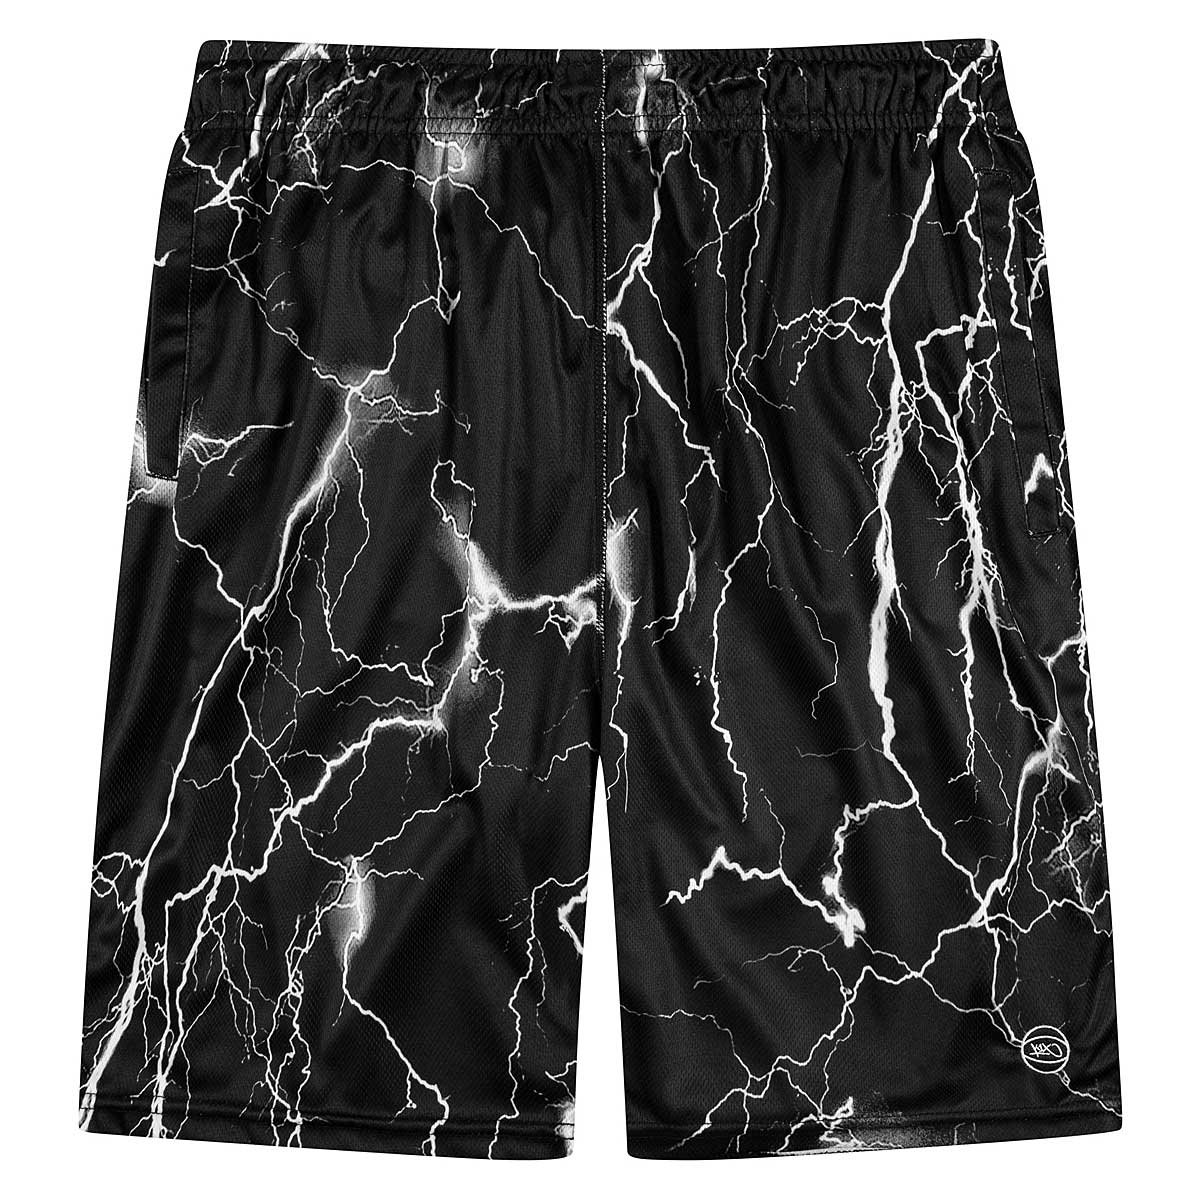 K1X Blitz Micromesh Shorts, Black